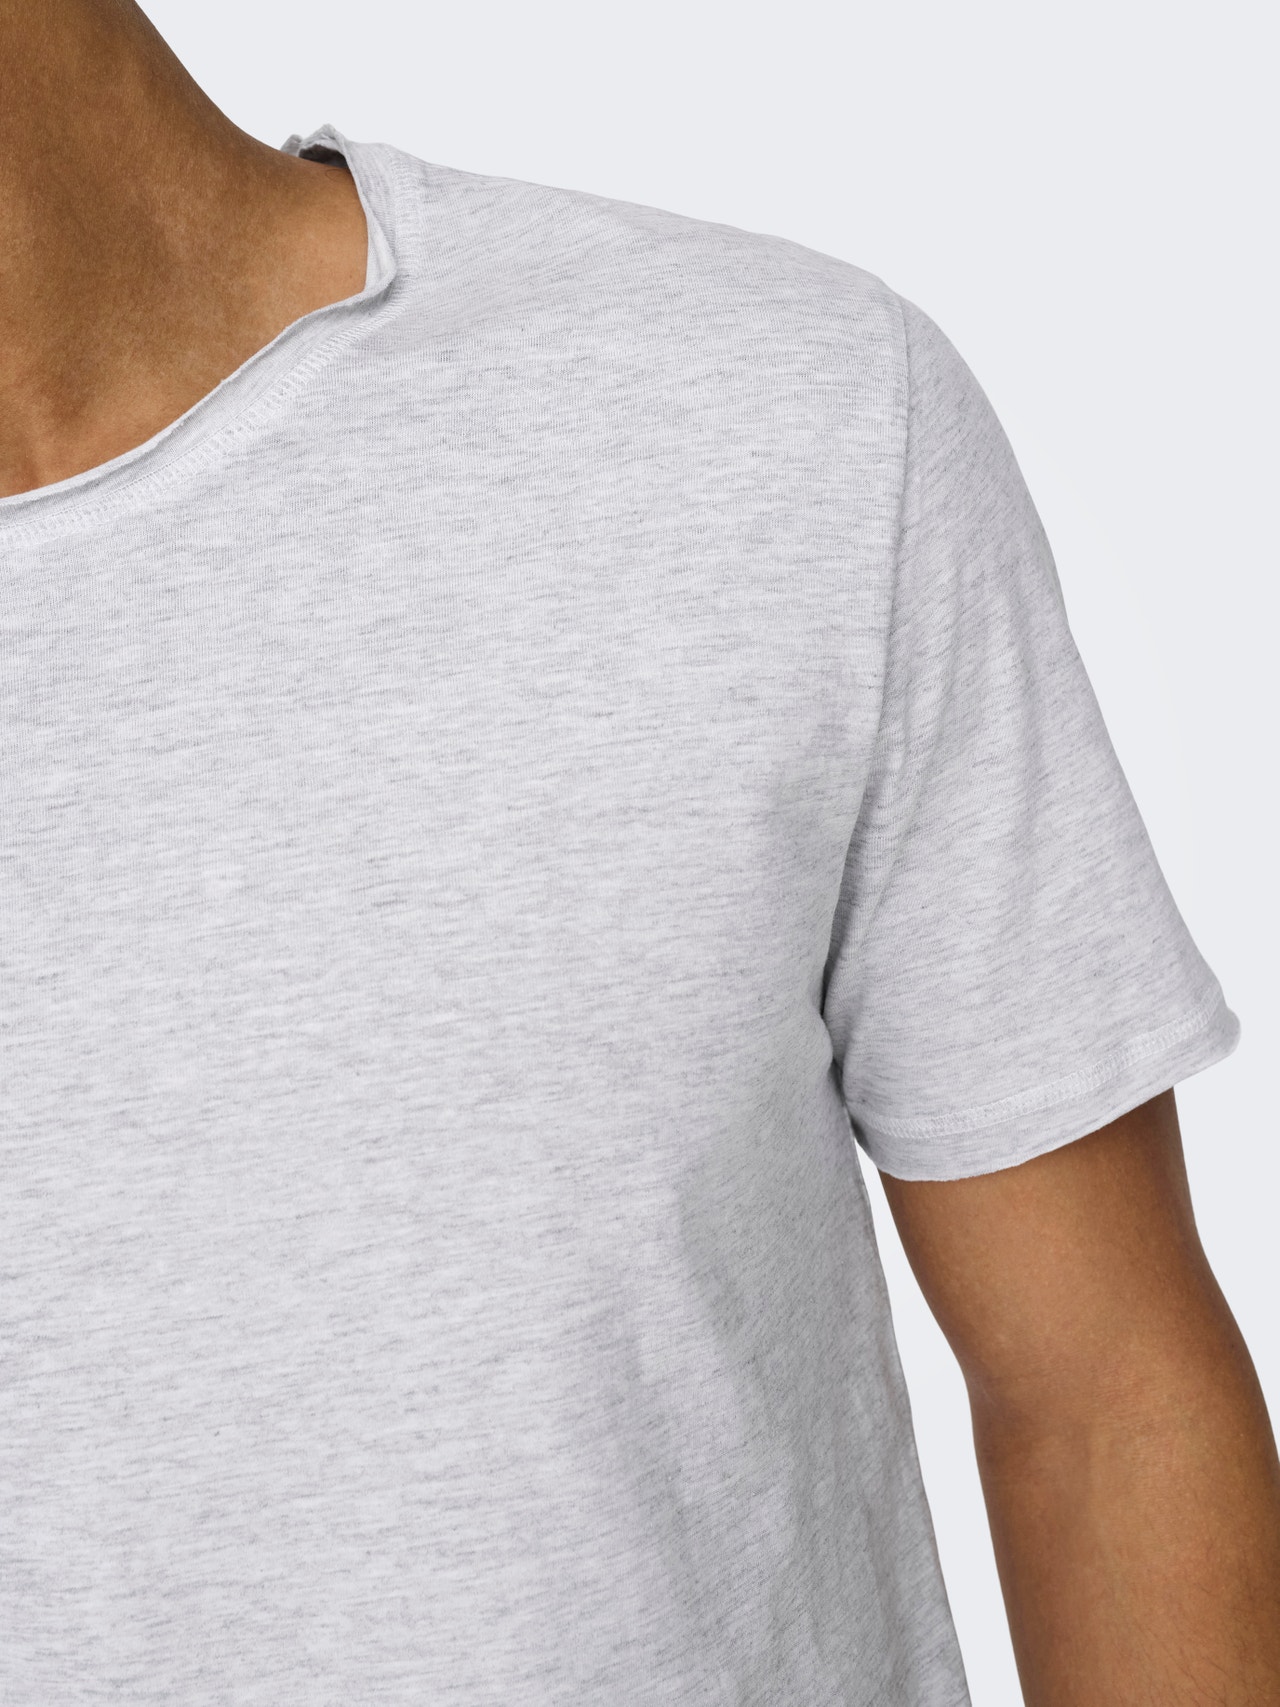 ONLY & SONS Normal geschnitten Rundhals T-Shirt -White - 22005108